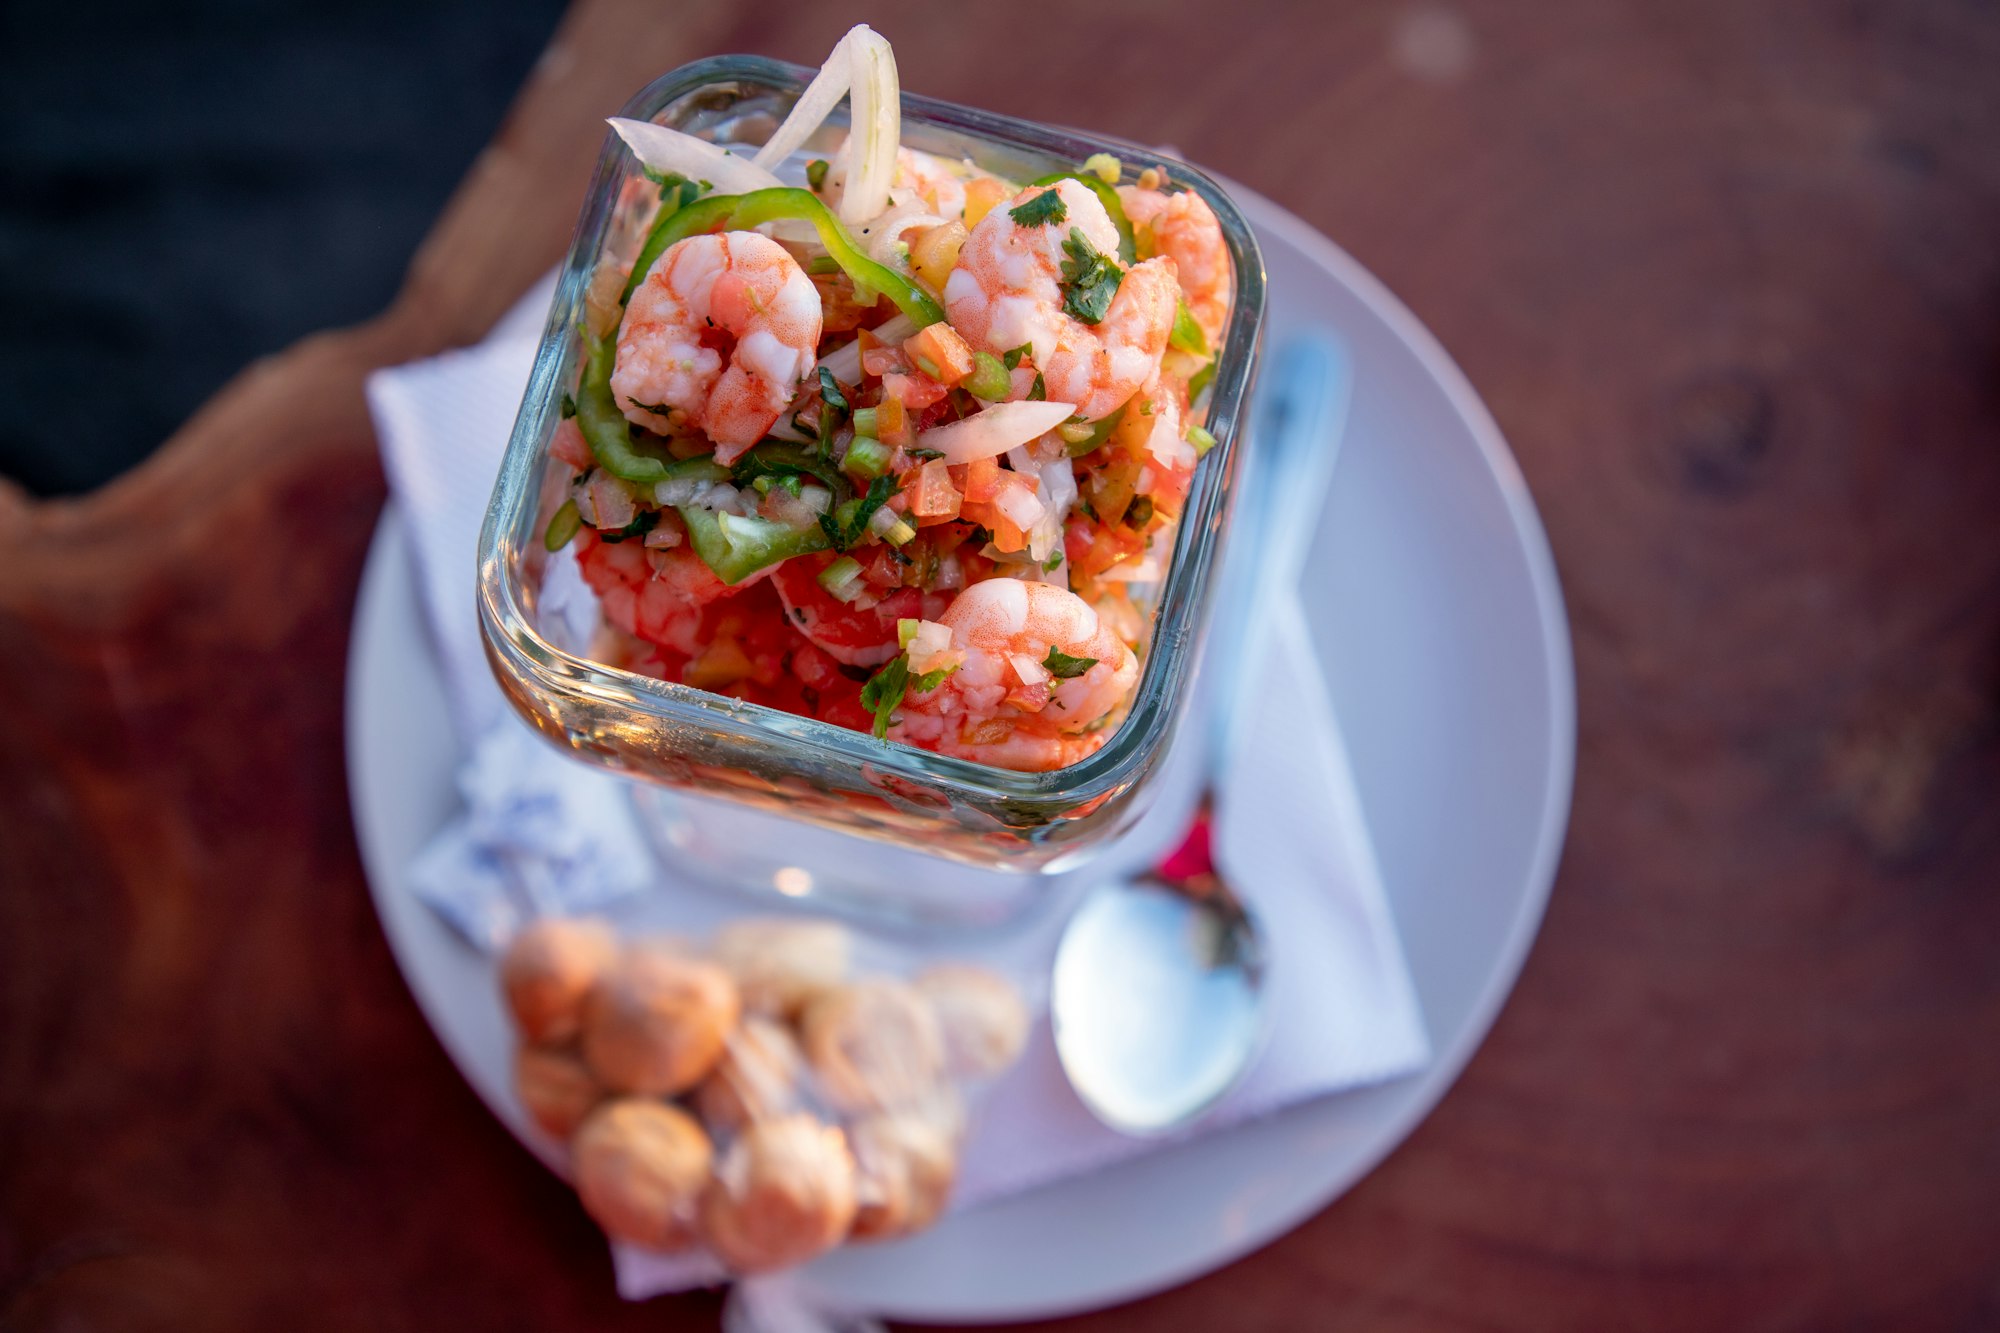 Mazatlan will have its own Gastronomic Neighborhood